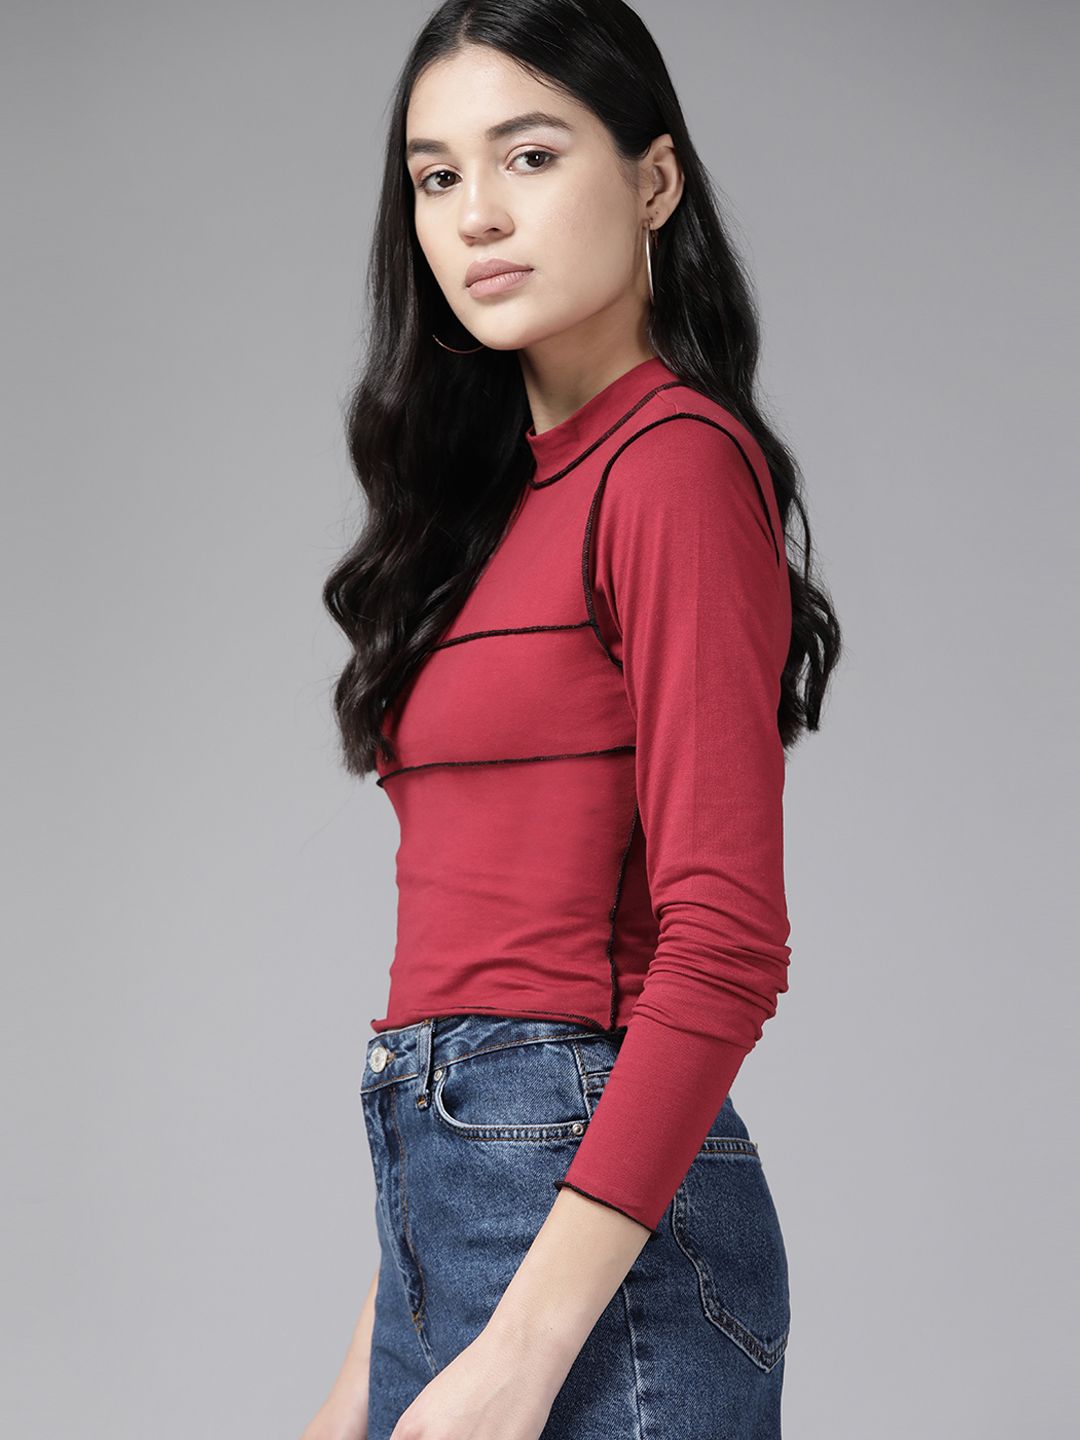 Macy's Karen Scott Red & Black Striped Top